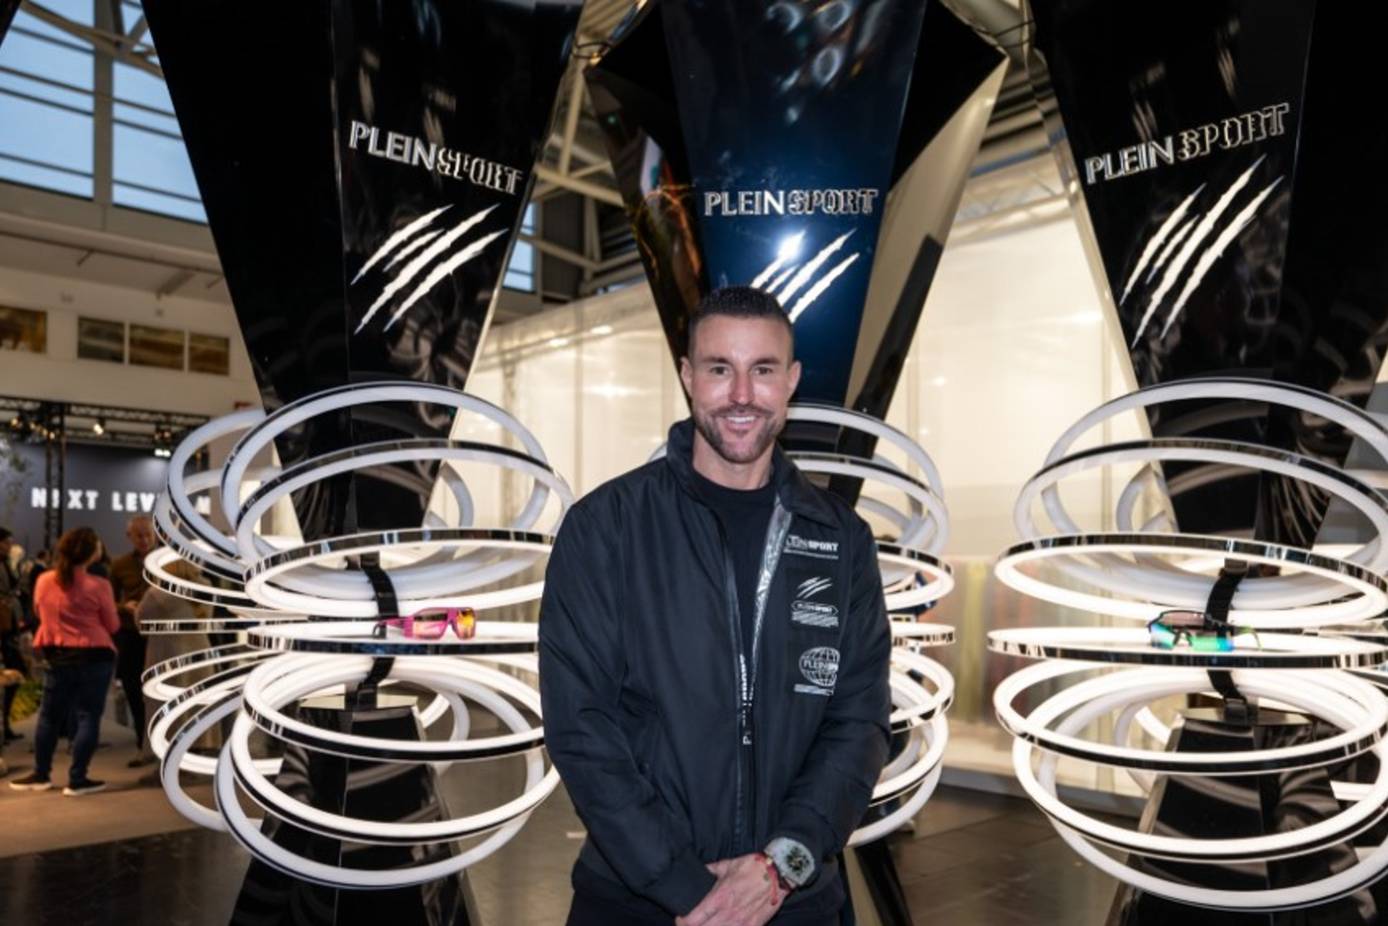 Philipp Plein's new direction: Plein Sport luxury sportswear for the masses